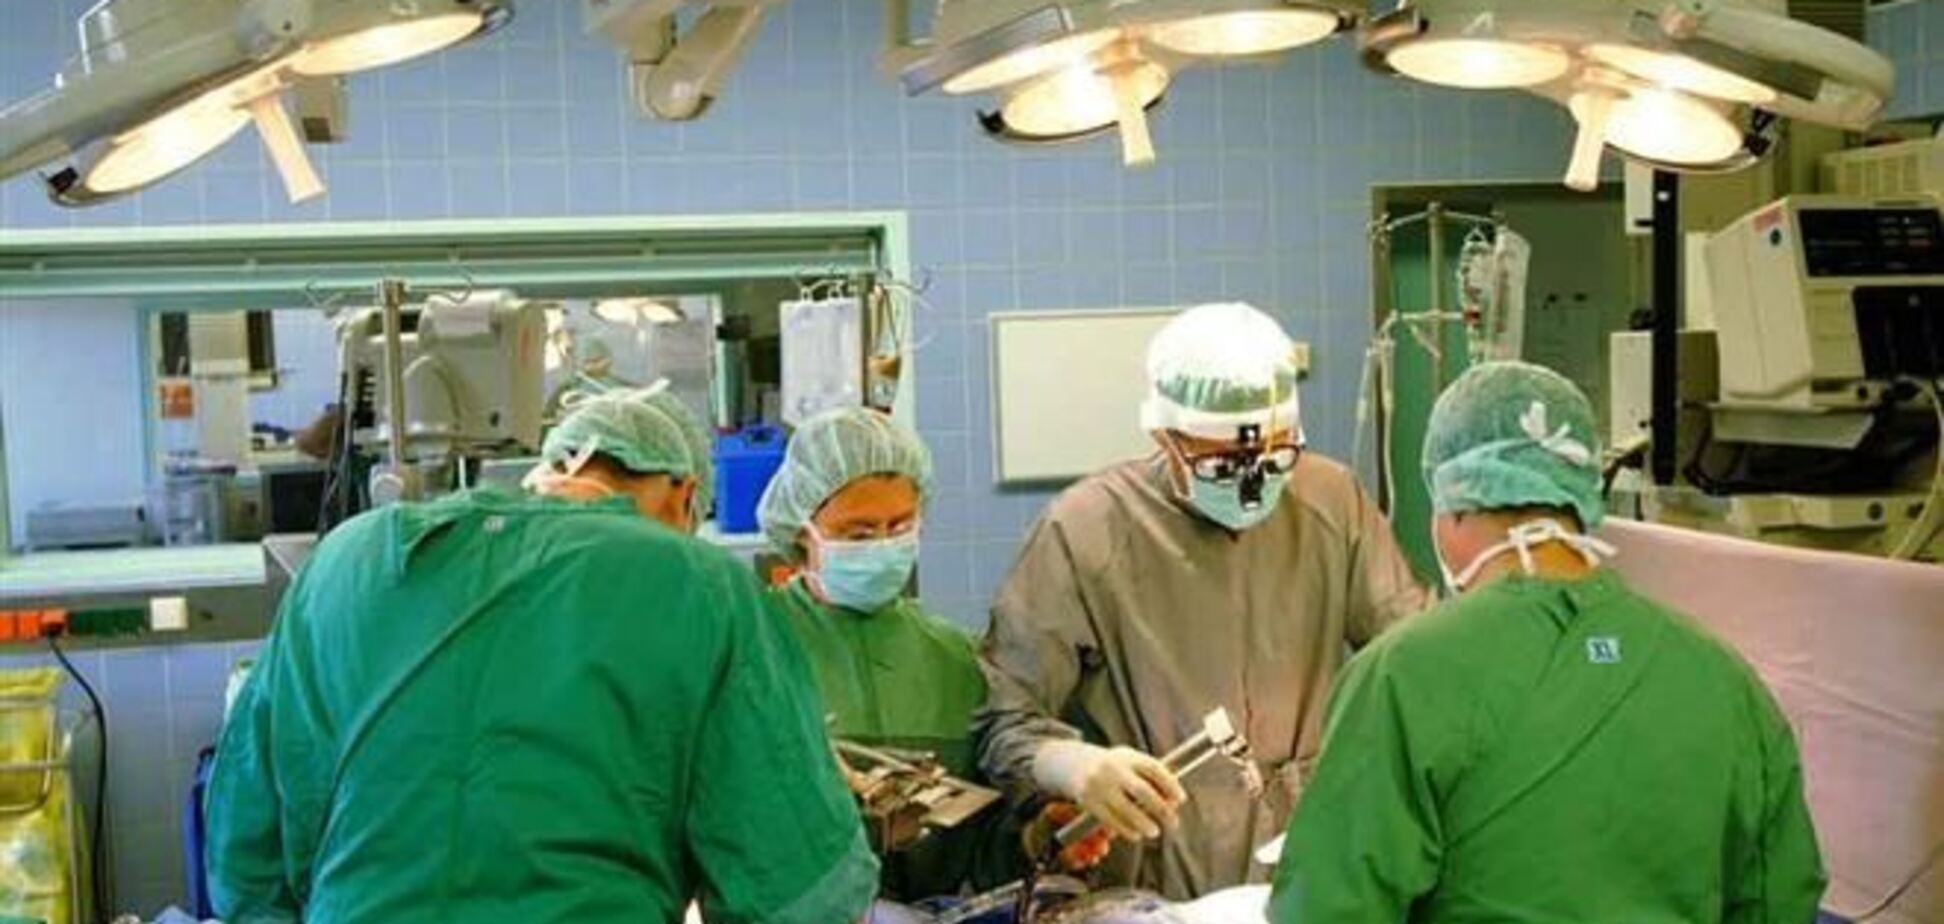 Британский хирург 'обозначил' своими инициалами печень пациента